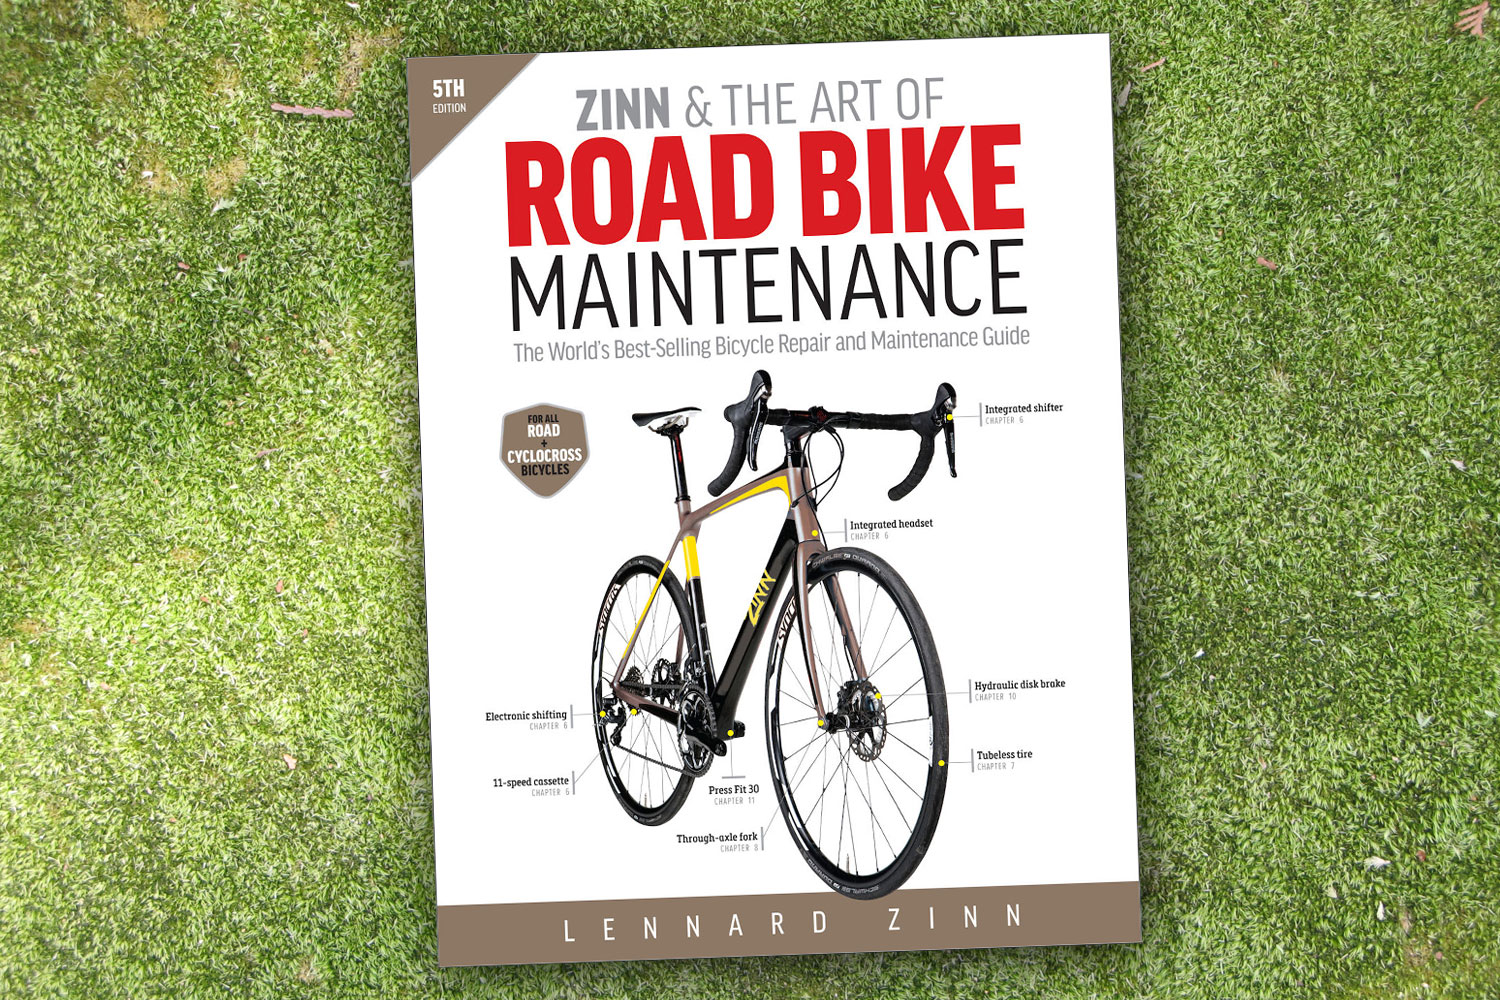 zinn and the art of mountain bike maintenance